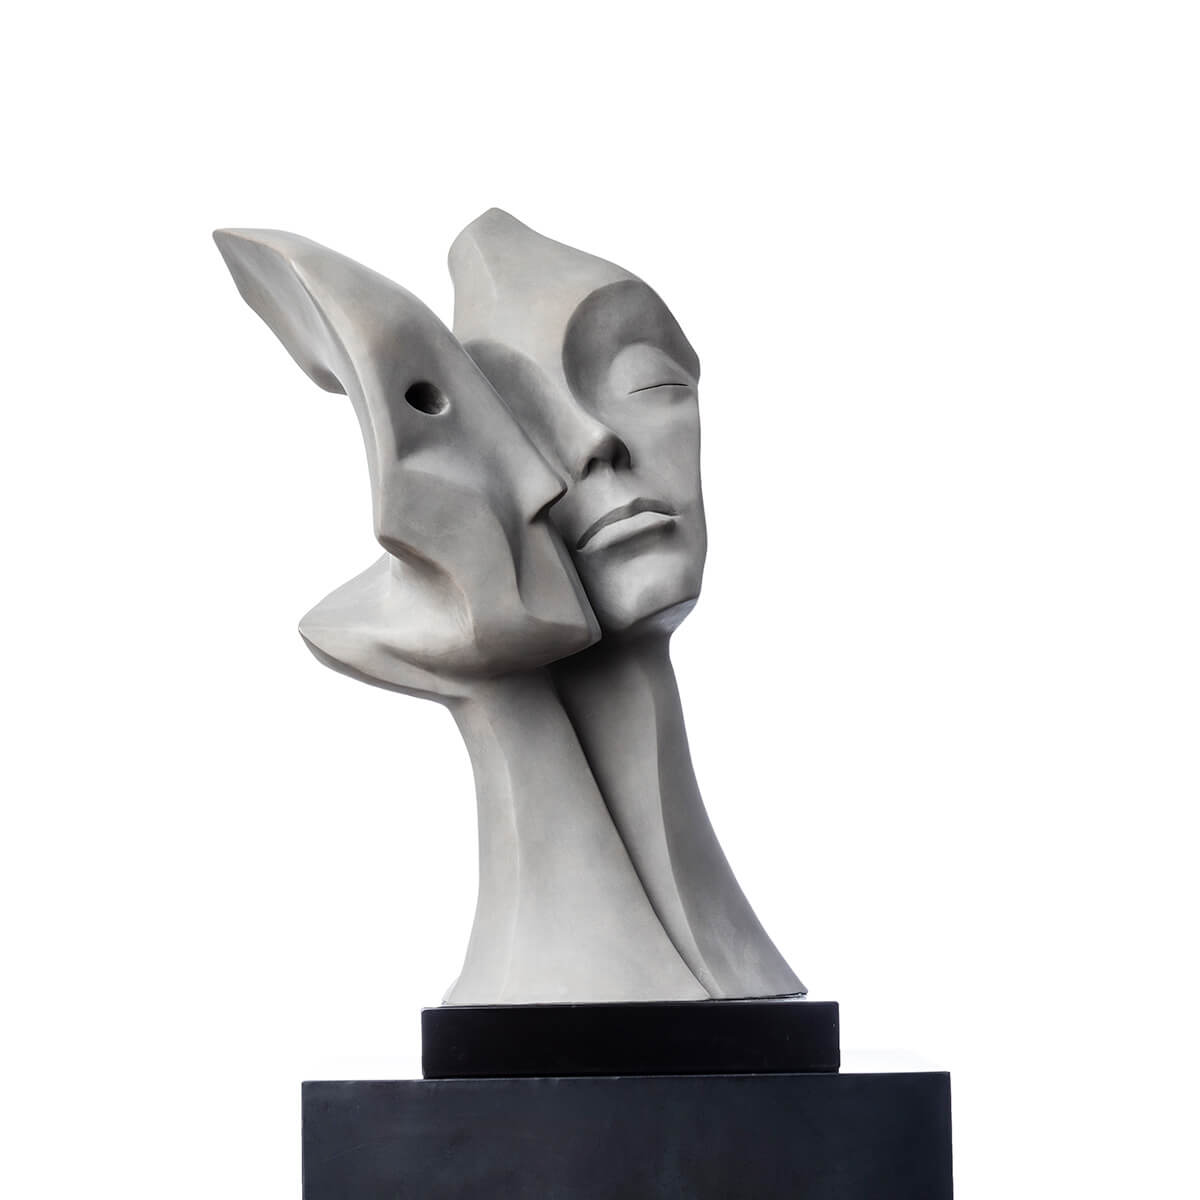 Robert-Helle-Sculpture-Gallery-Together-2-1200x1200